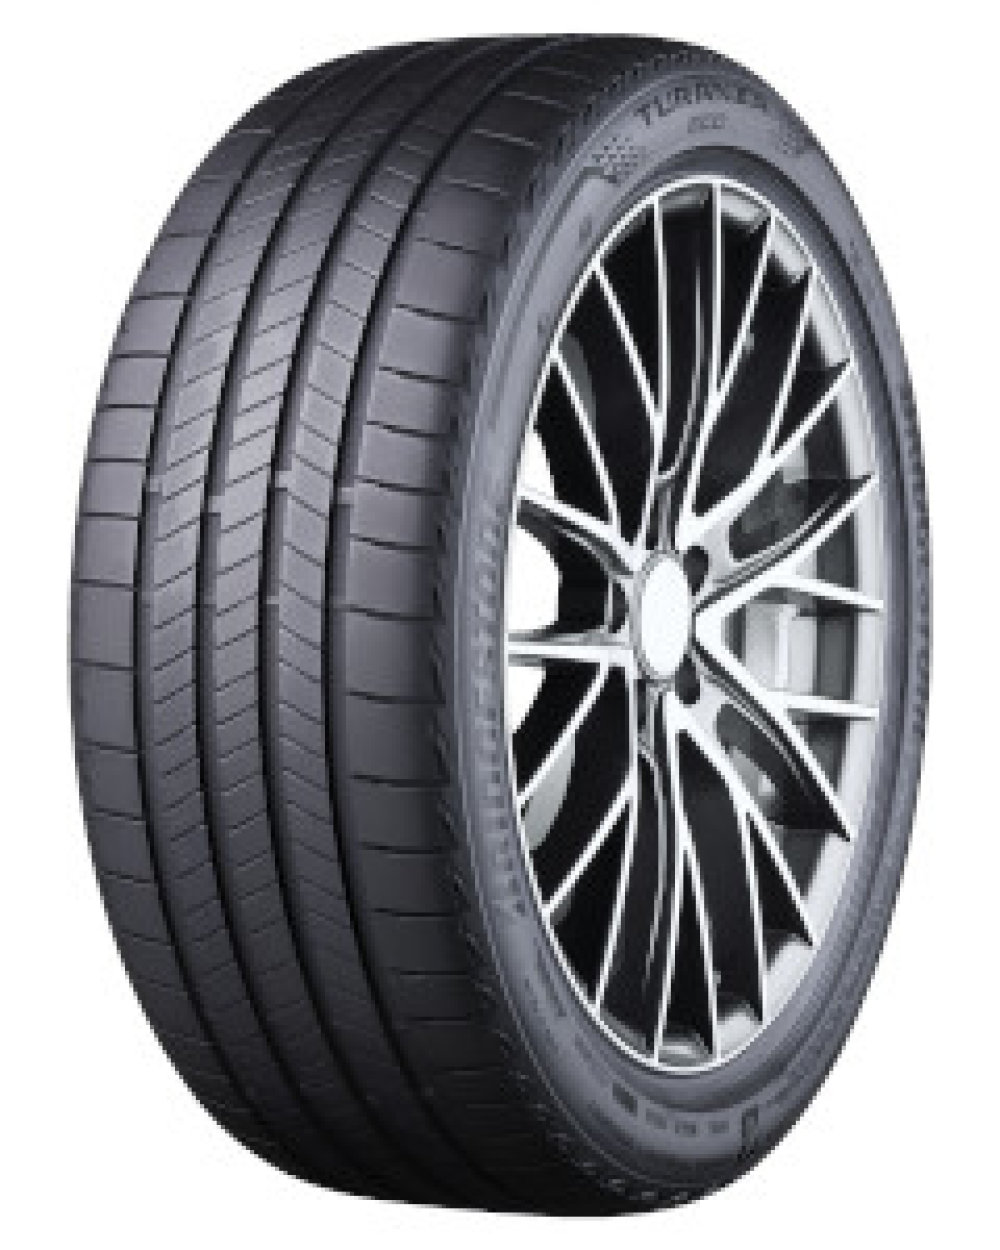 Bridgestone Turanza Eco ( 235/45 R21 101T XL (+), AO, B-Seal, Enliten )